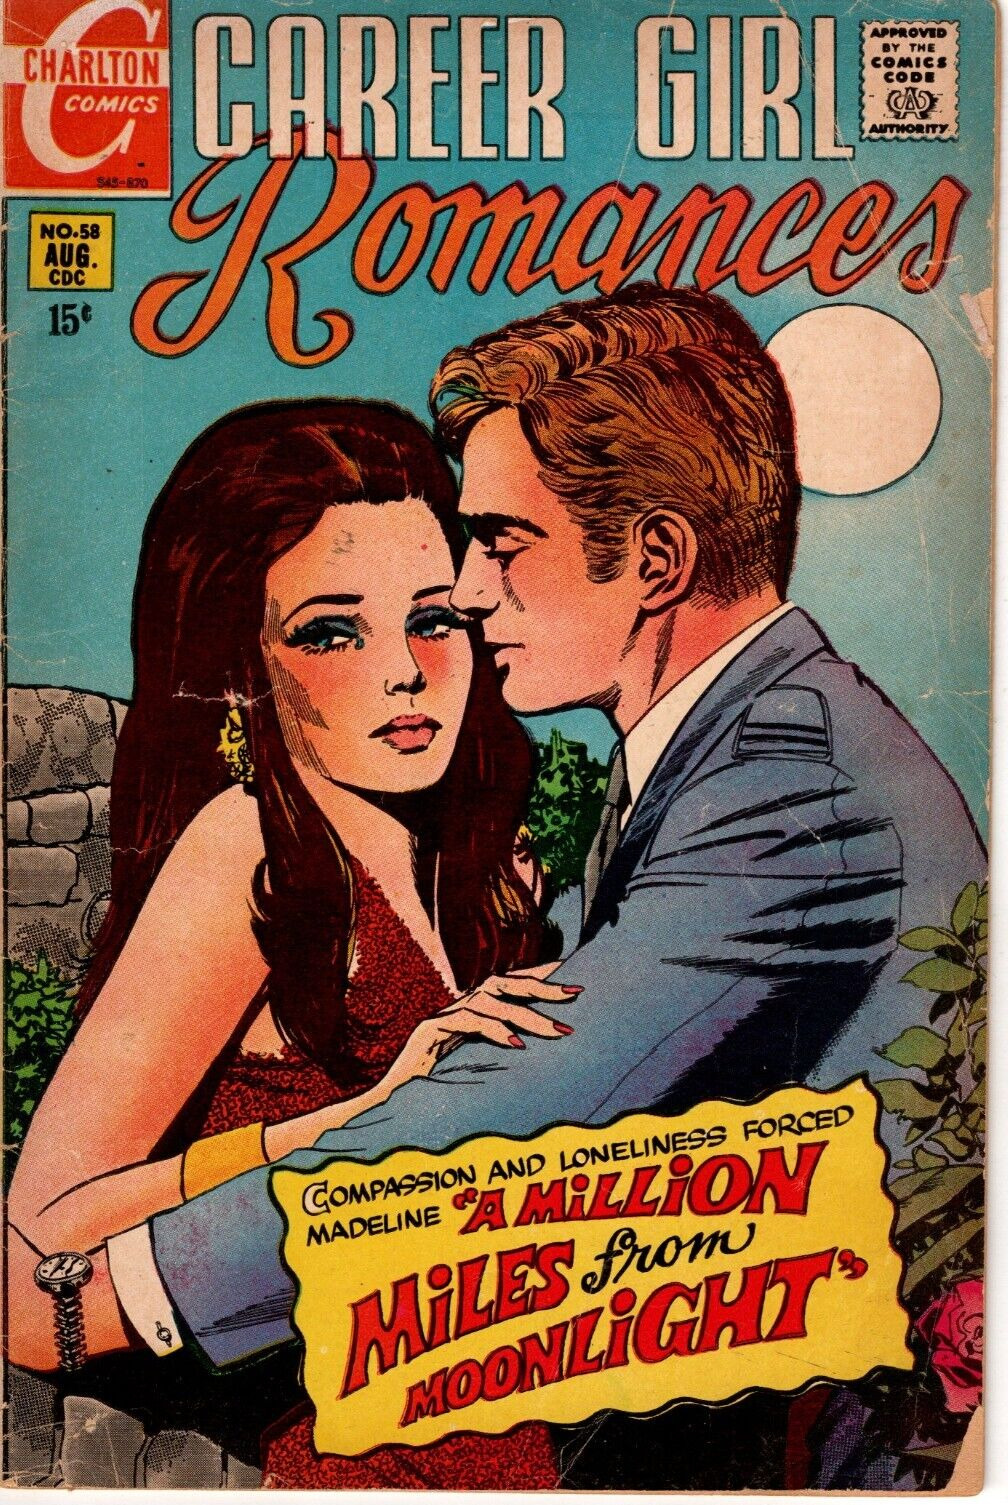 Career Girl Romance #58 1970 Low grade